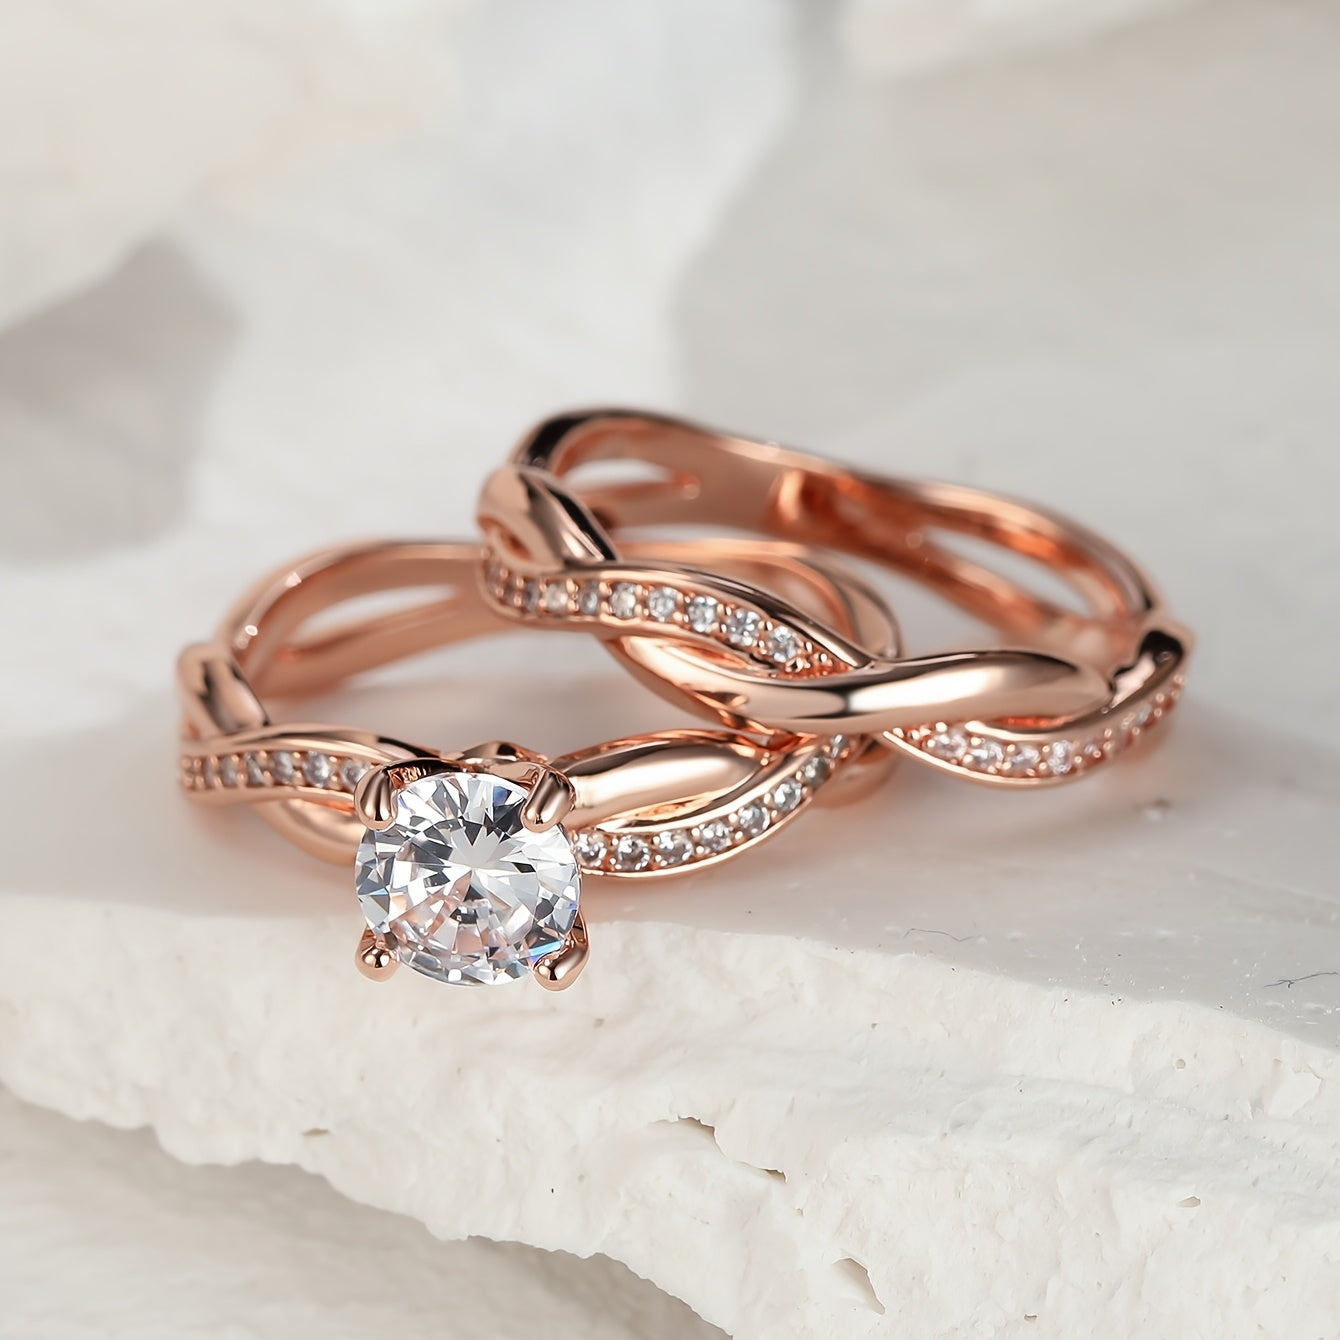 Beautiful 18K Gold Plated Twist Design Zircon Ring Set - Perfect Gift for Women & Girls!